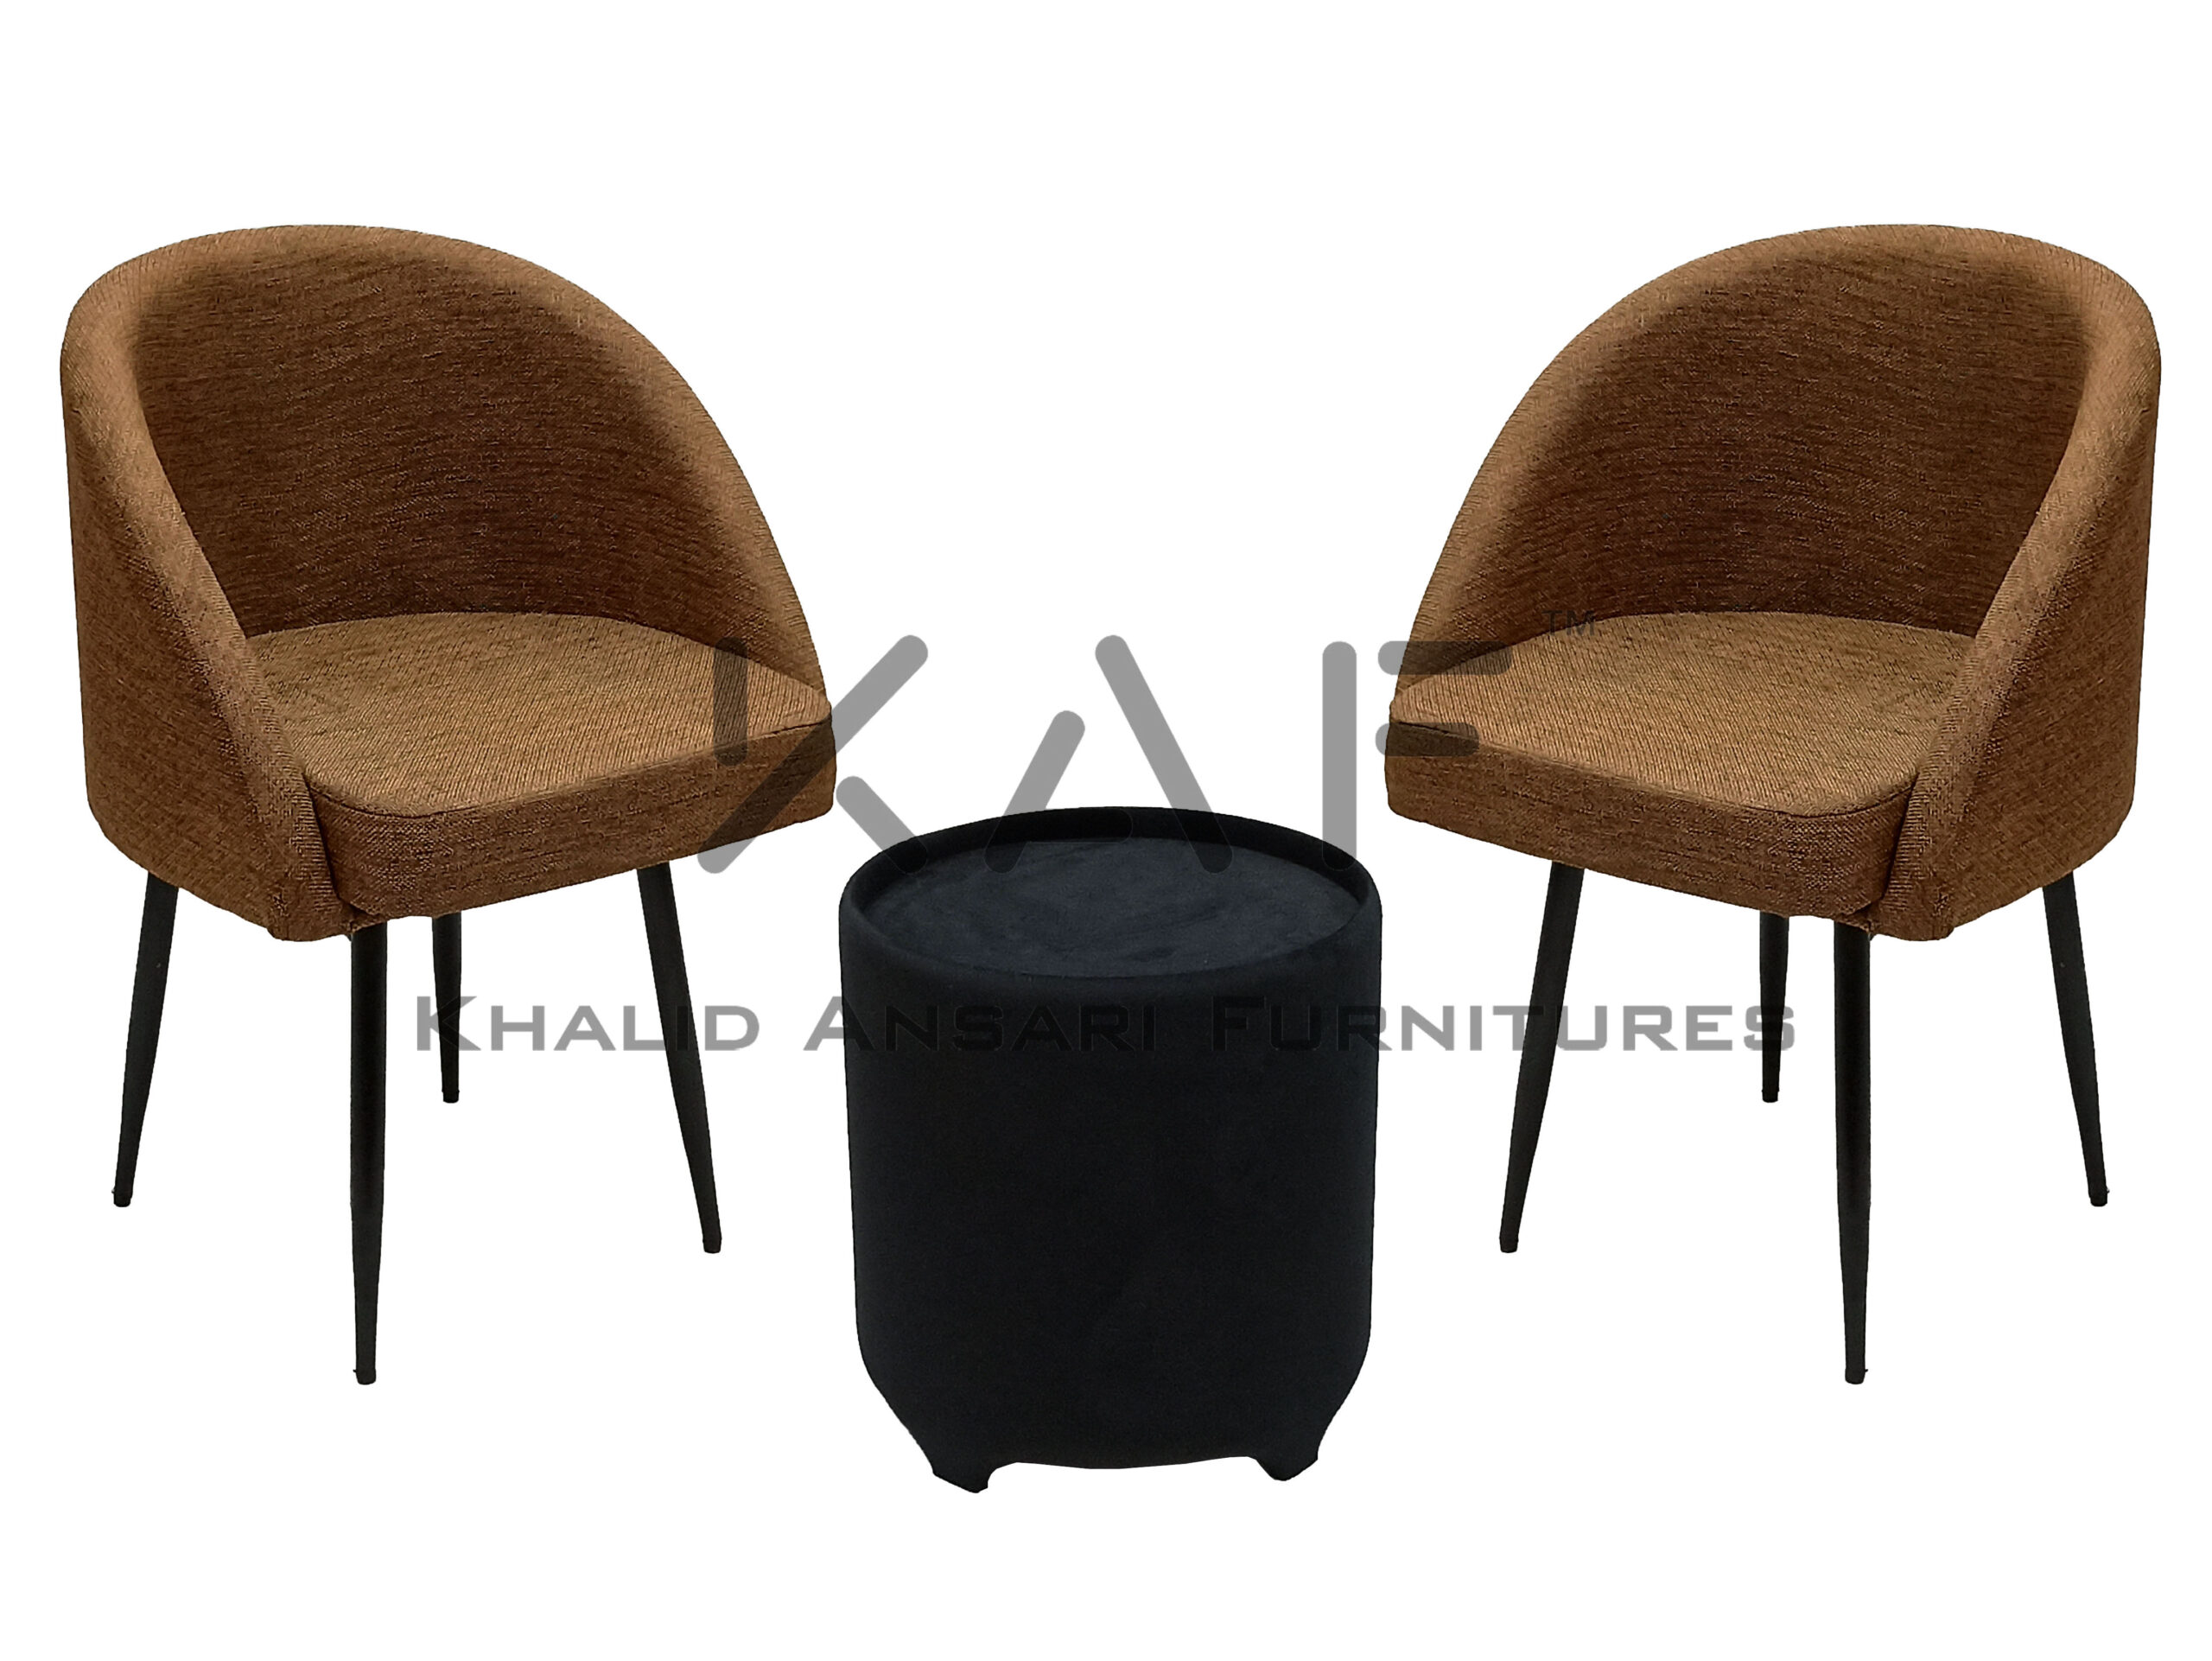 Bed Room Premium Chair Slope Arm Design Multi Polish Jute Fabric set with Black Velvet Tea Table - 2 Chairs + 1 Table